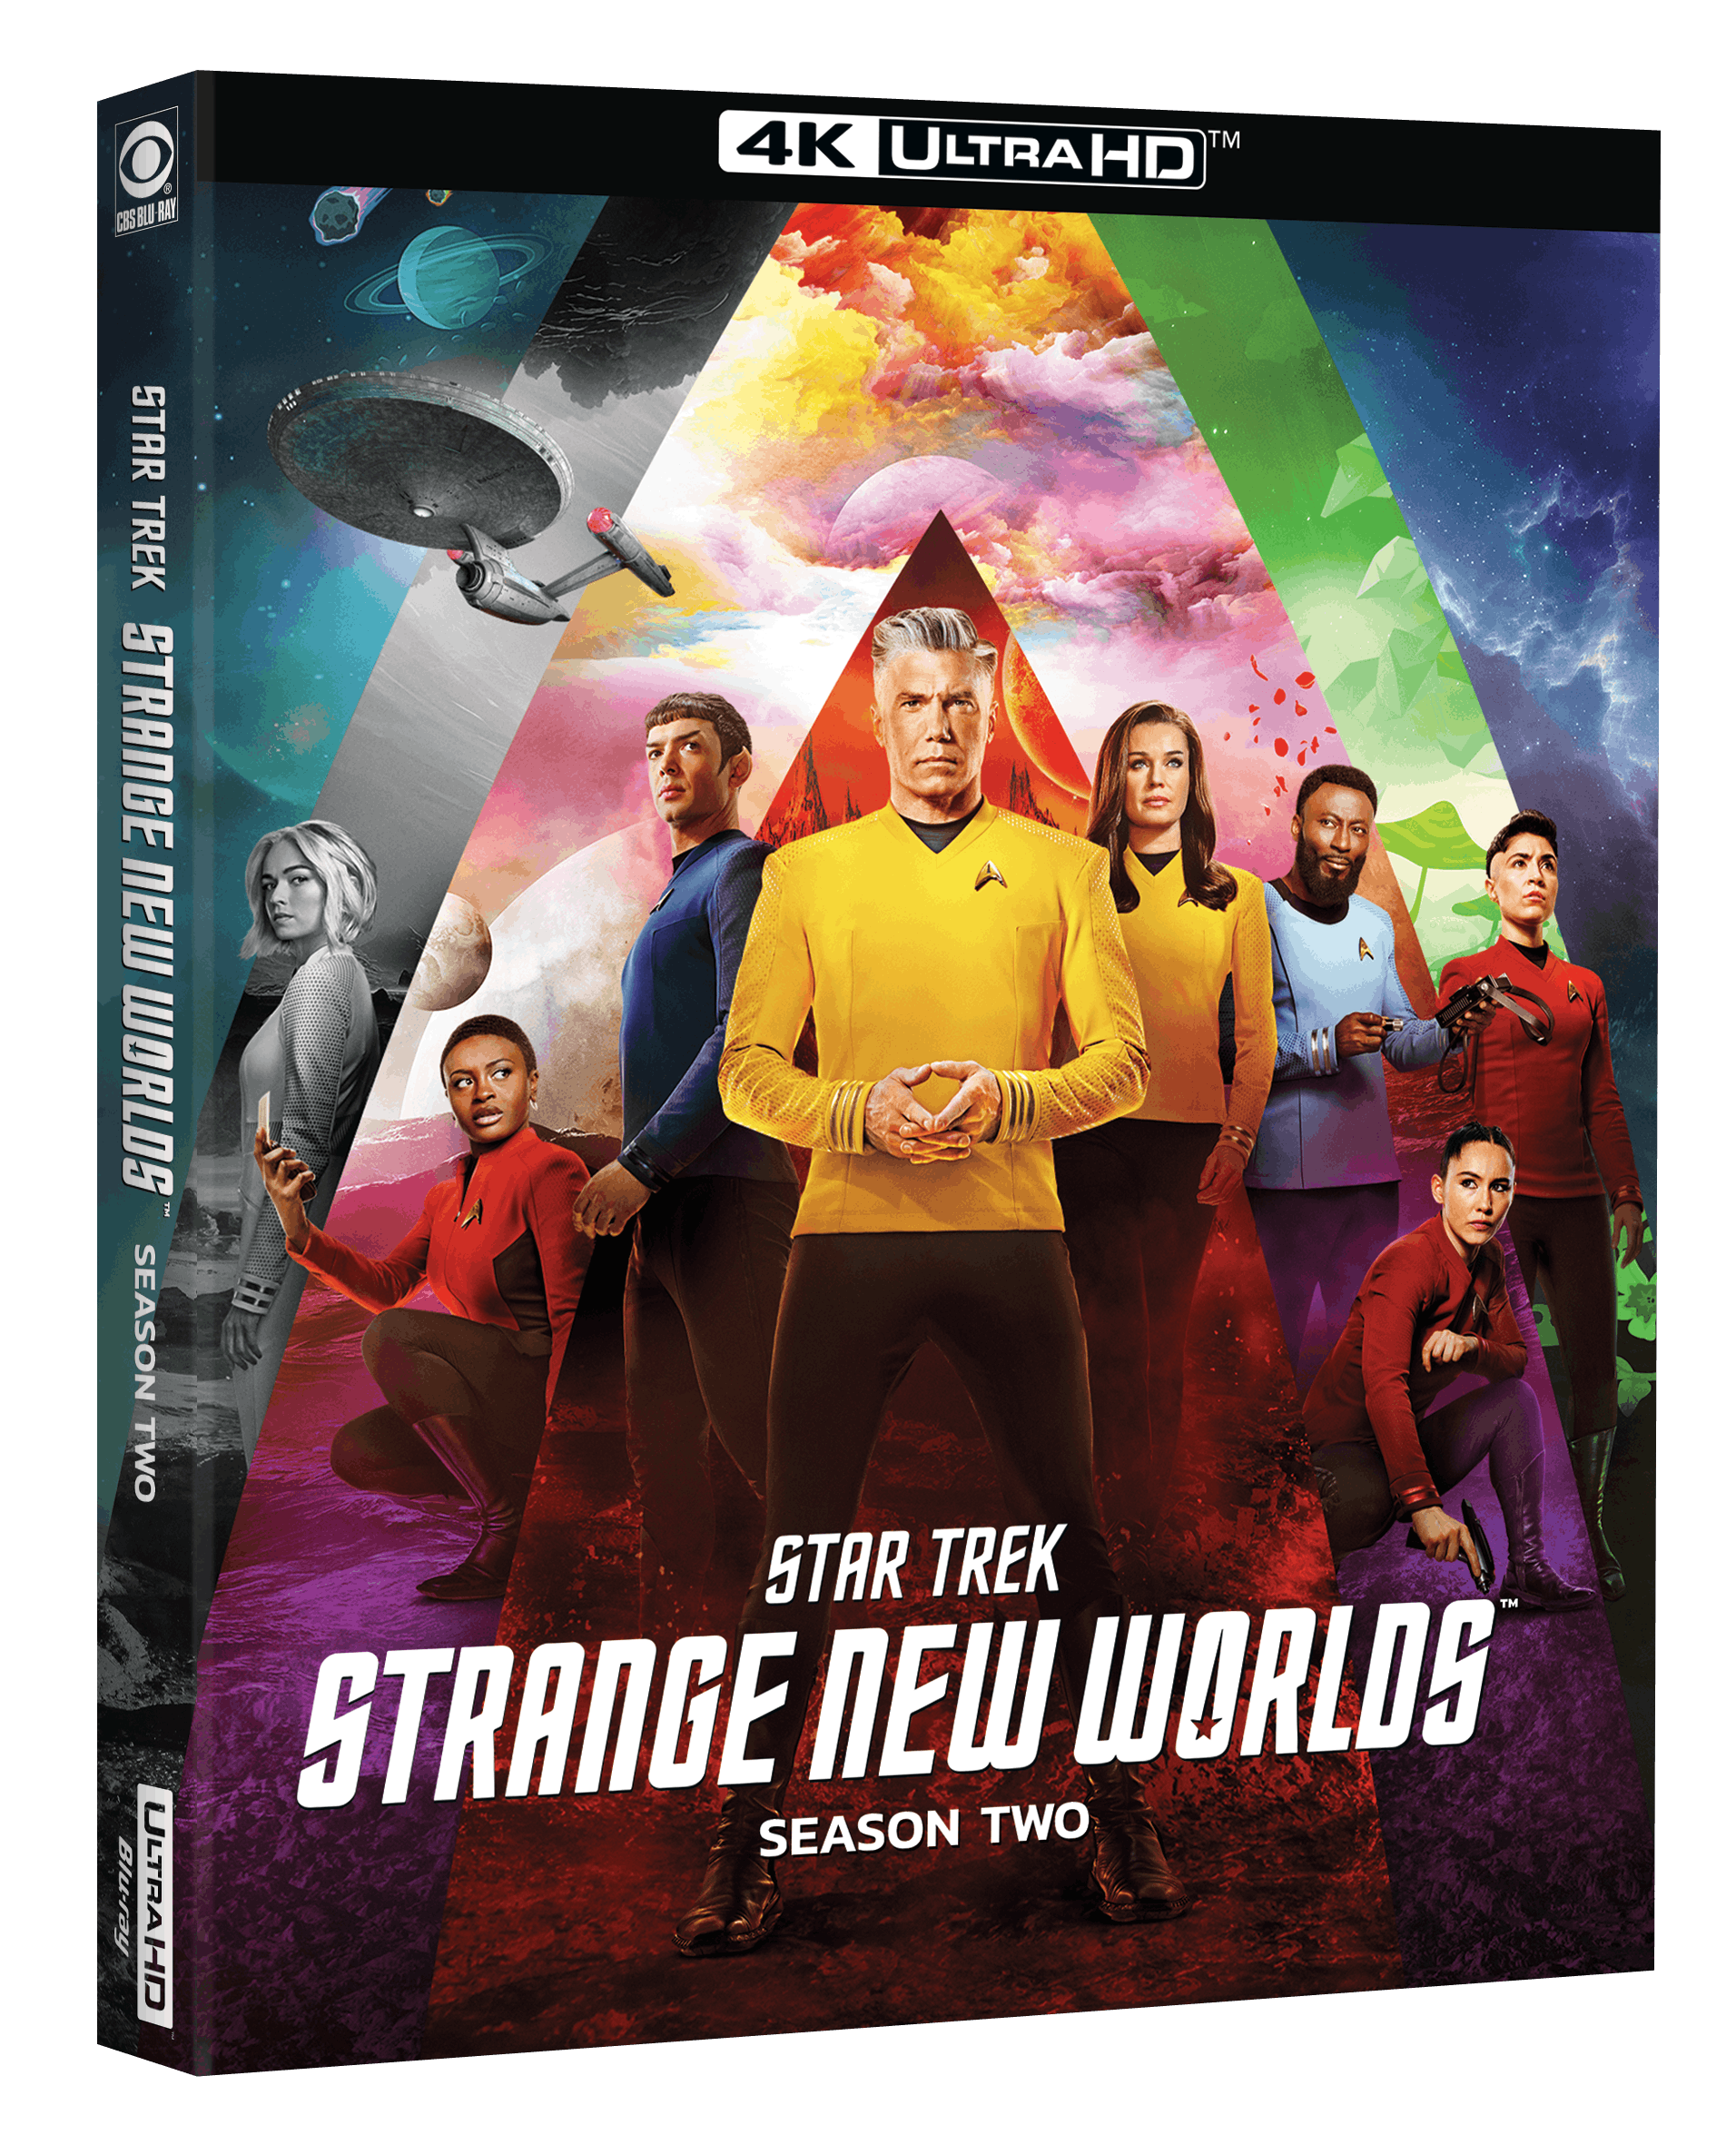 Star Trek: Strange New Worlds Season 2 - 4K Ultra HD Blu-ray packshot